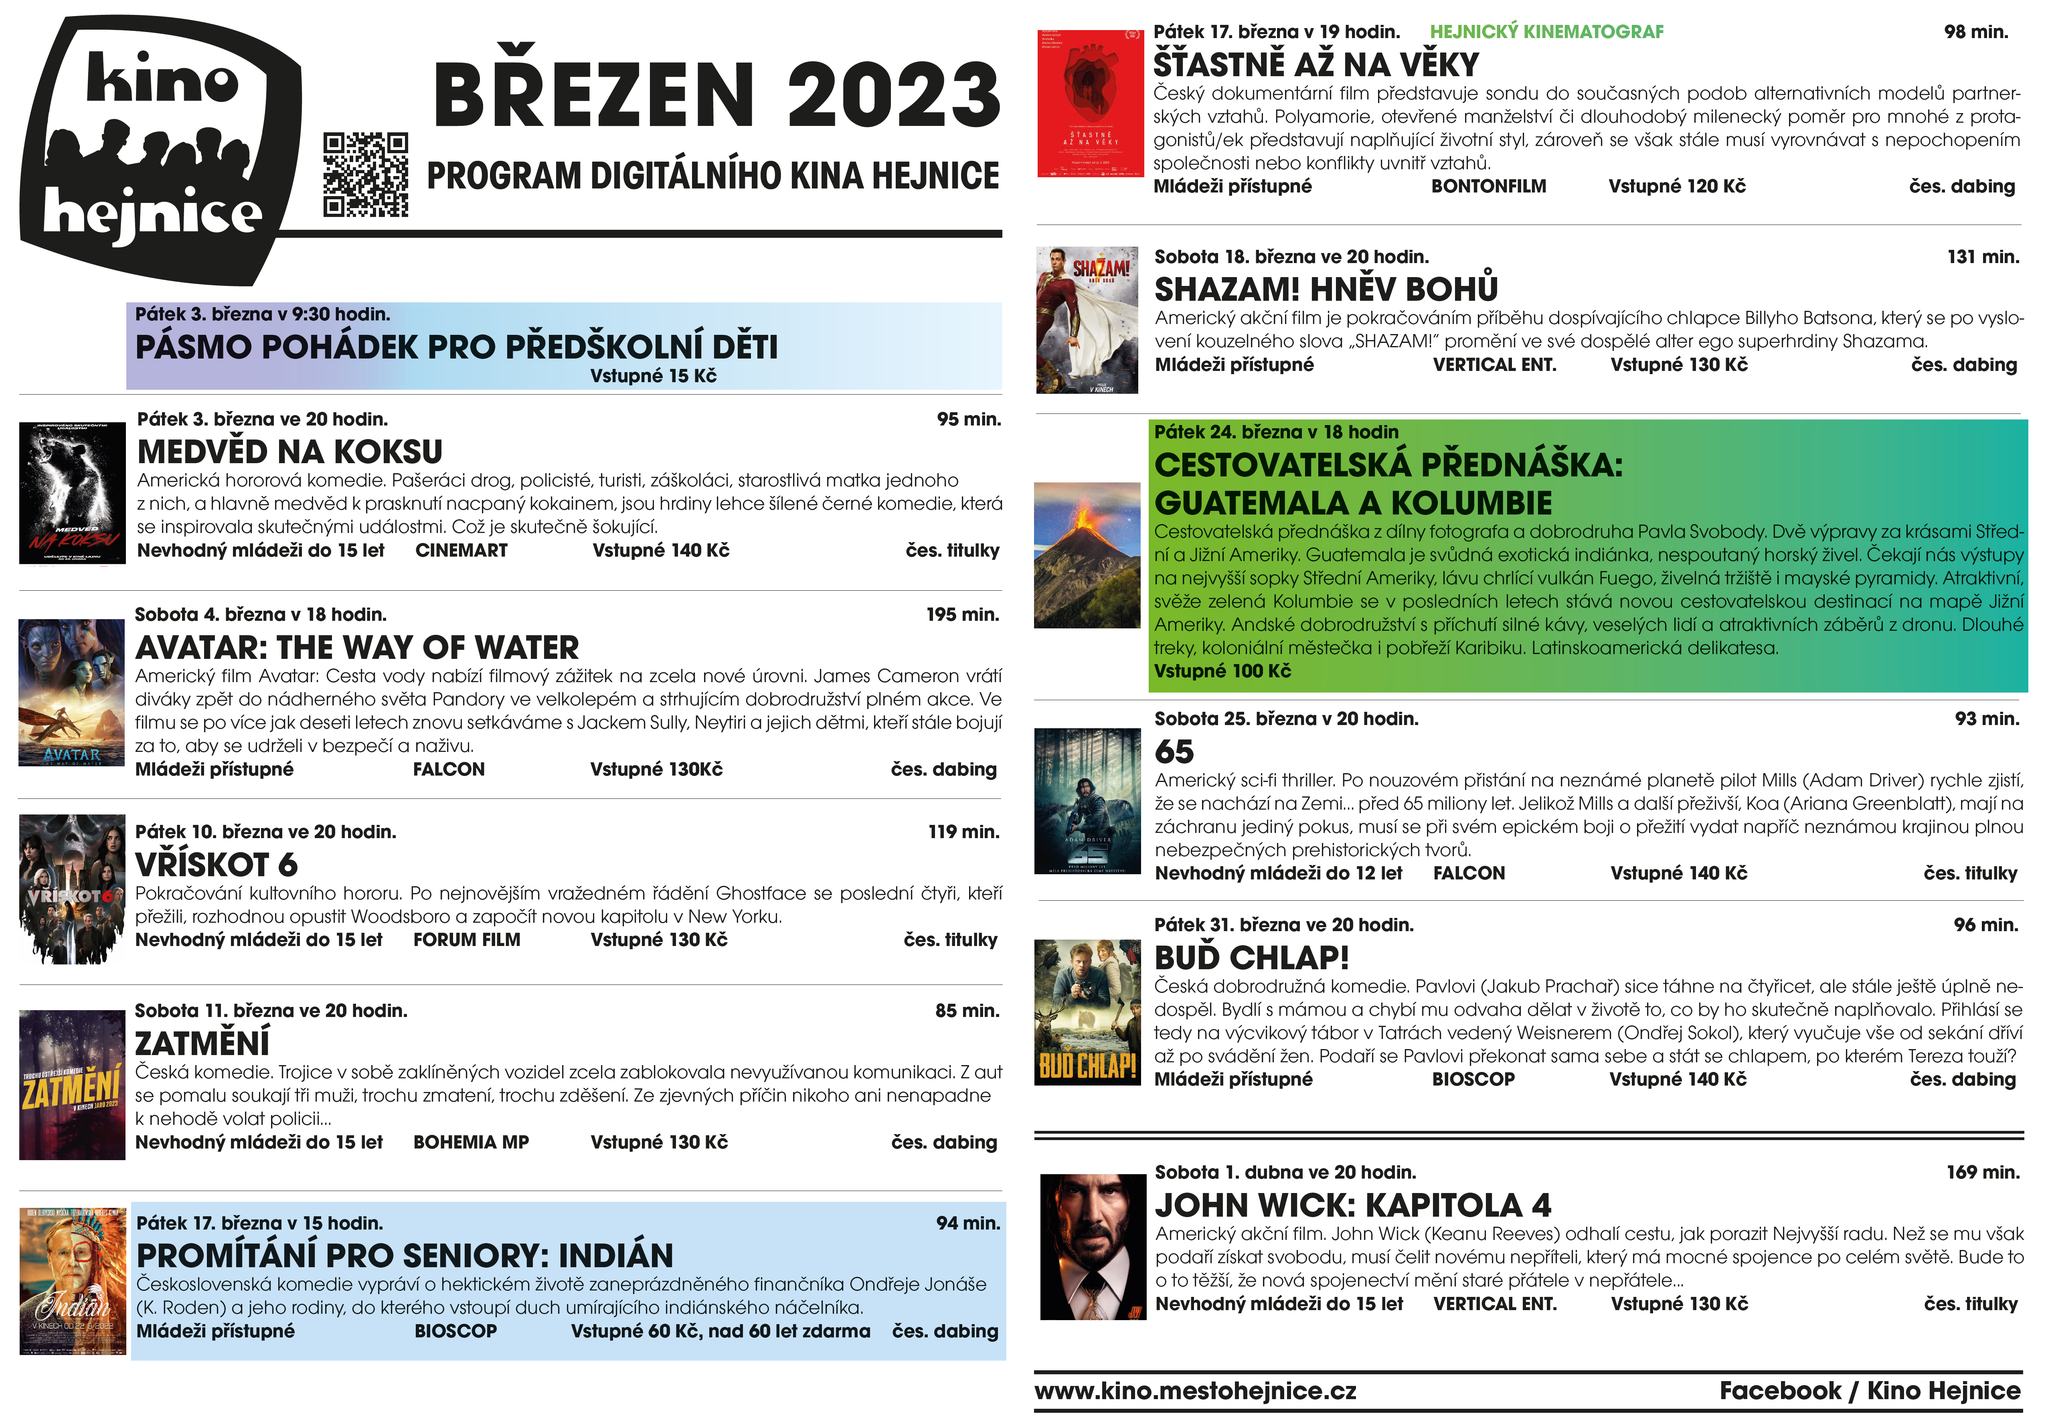 154 kino Hejnice program brezen 2023 frydlanstko